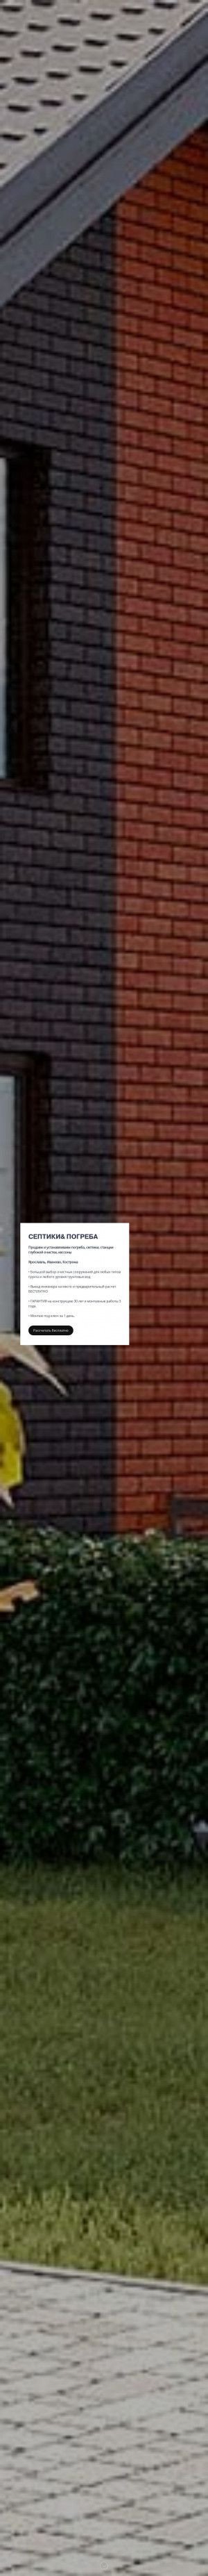 Предпросмотр для septikmonolit.ru — Септики&погреба